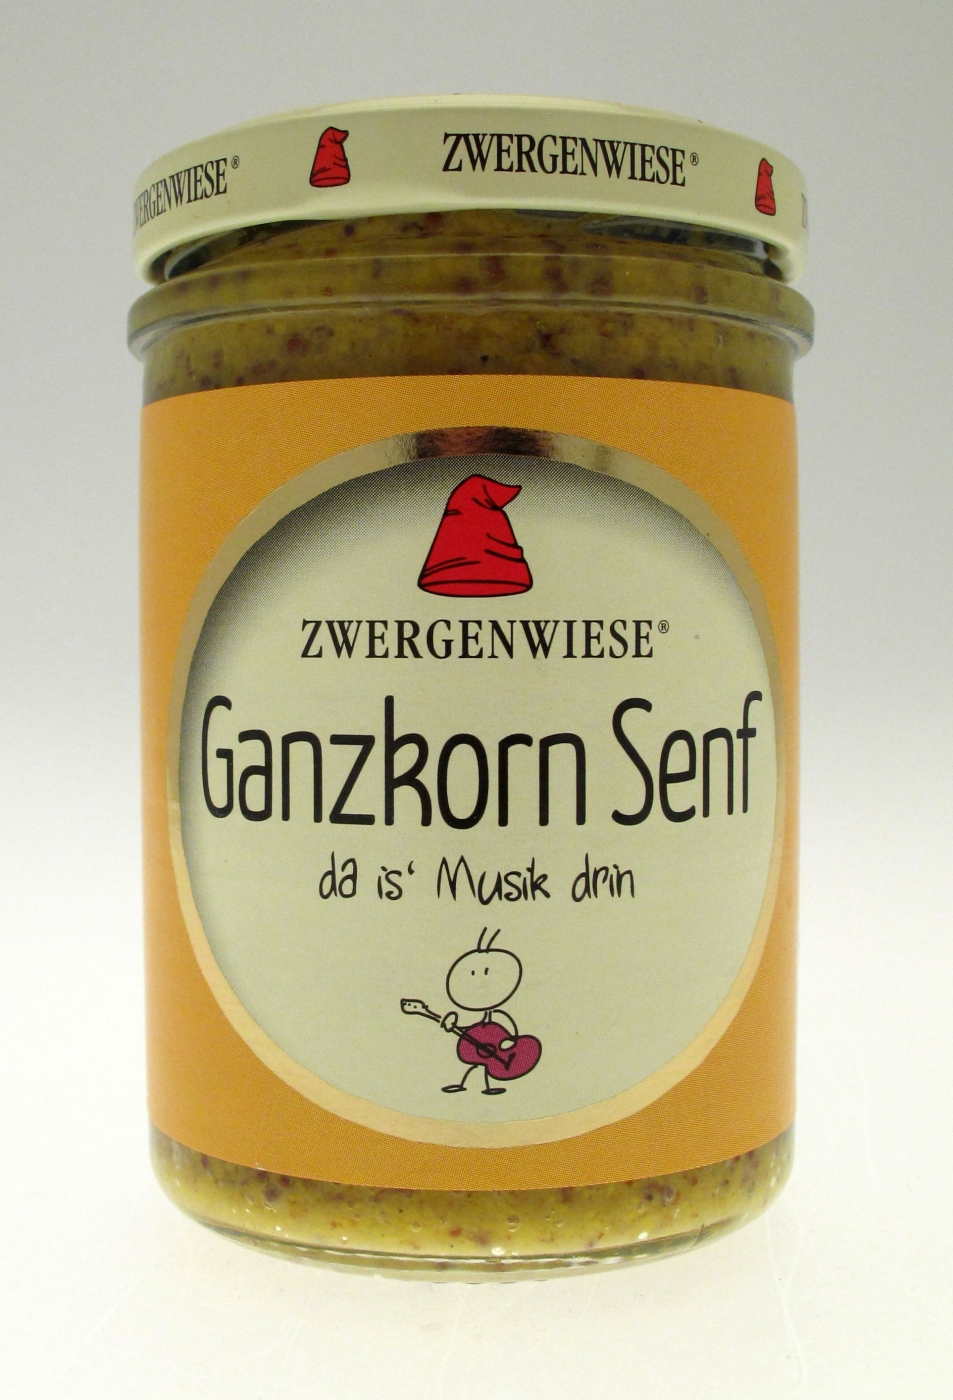 Ganzkorn Senf